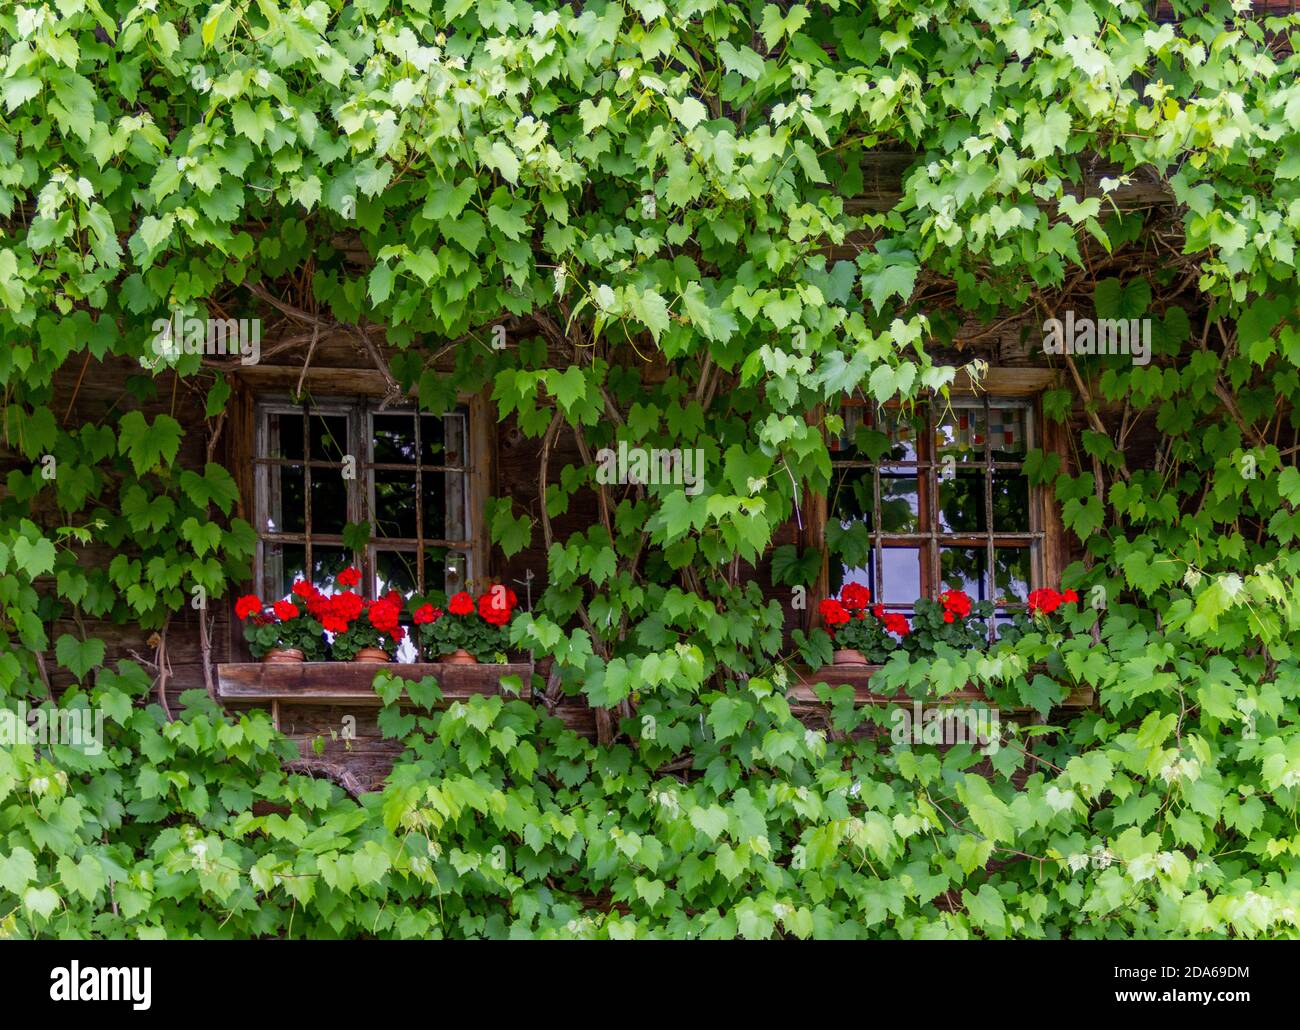 rural windows at a house facade overgrown by climbing plants Stock Photo